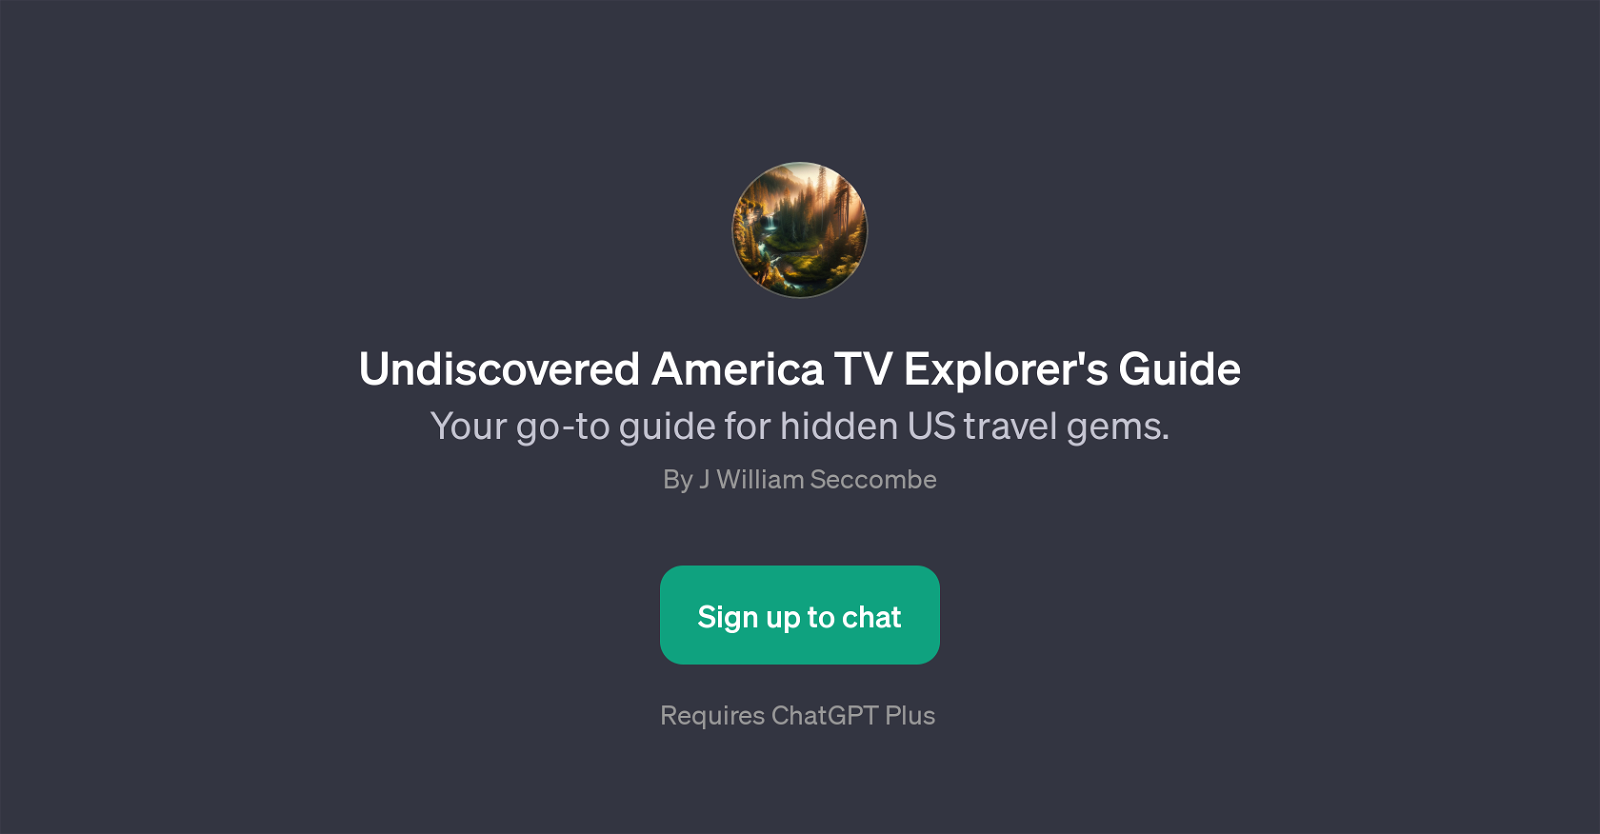 Undiscovered America TV Explorer's Guide website